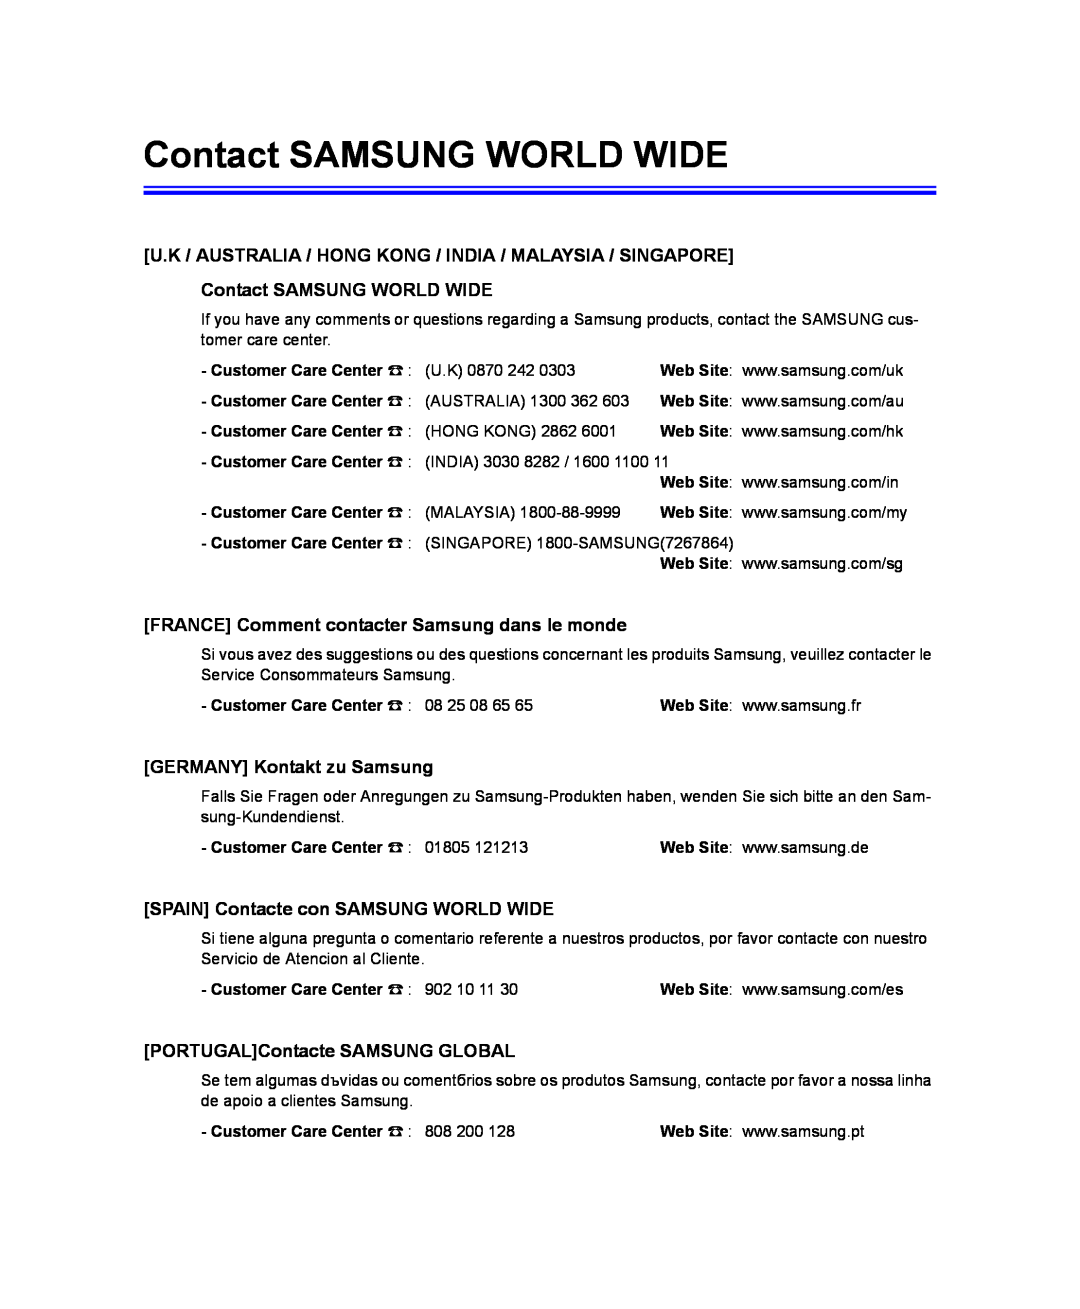 Samsung NP-R40FY01/SEG Contact SAMSUNG WORLD WIDE, U.K / Australia / Hong Kong / India / Malaysia / Singapore, Web Site 